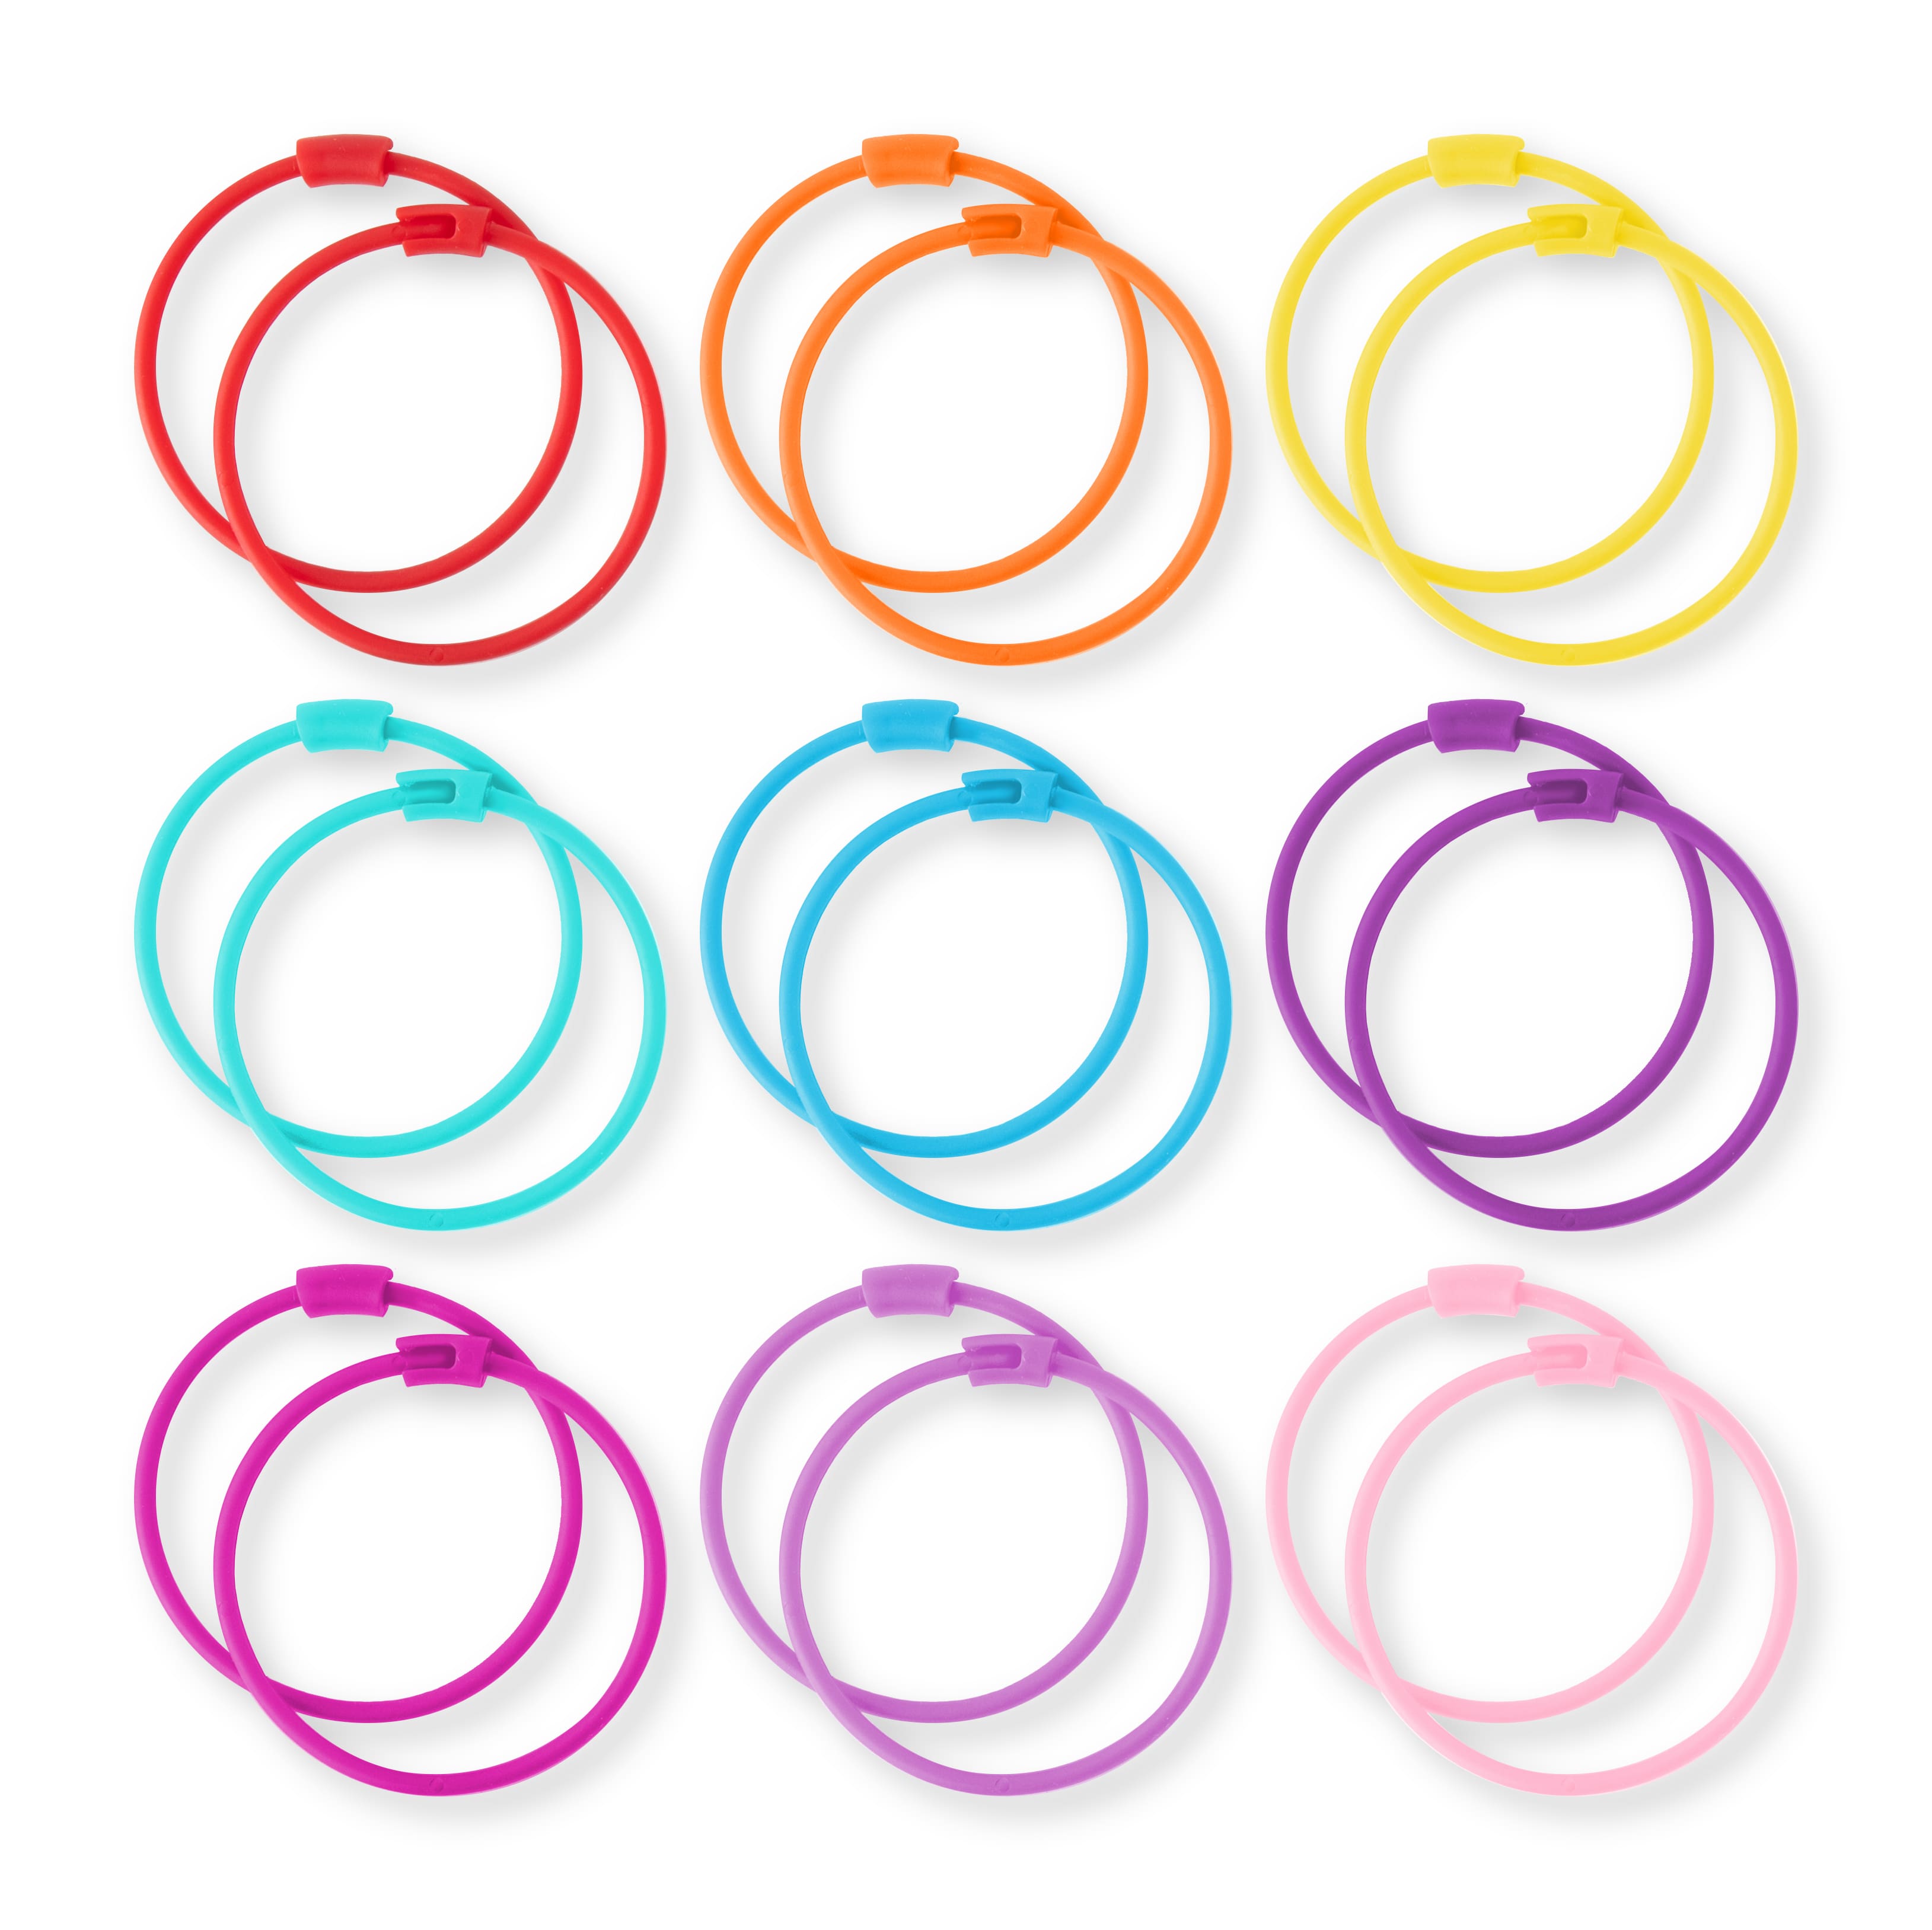 Buy in Bulk - 12 Packs: 18 ct. (216 total) Plastic Bead Bracelets by ...